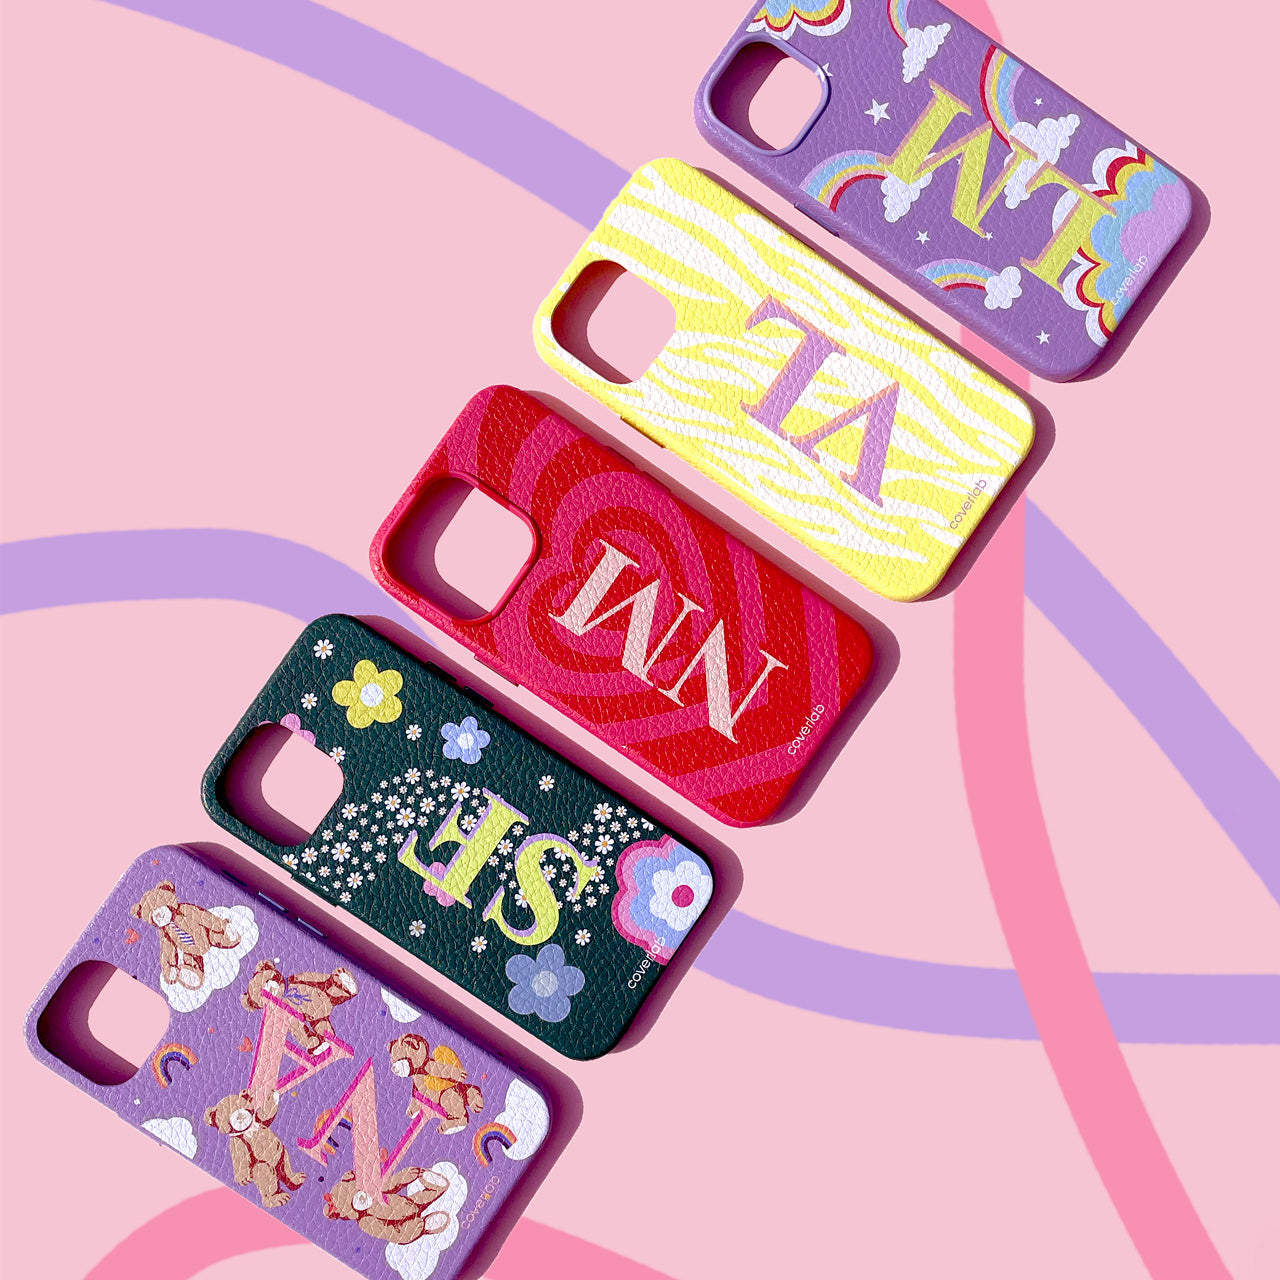 Pastell Sterne Personalisierte Leder iPhone Hülle